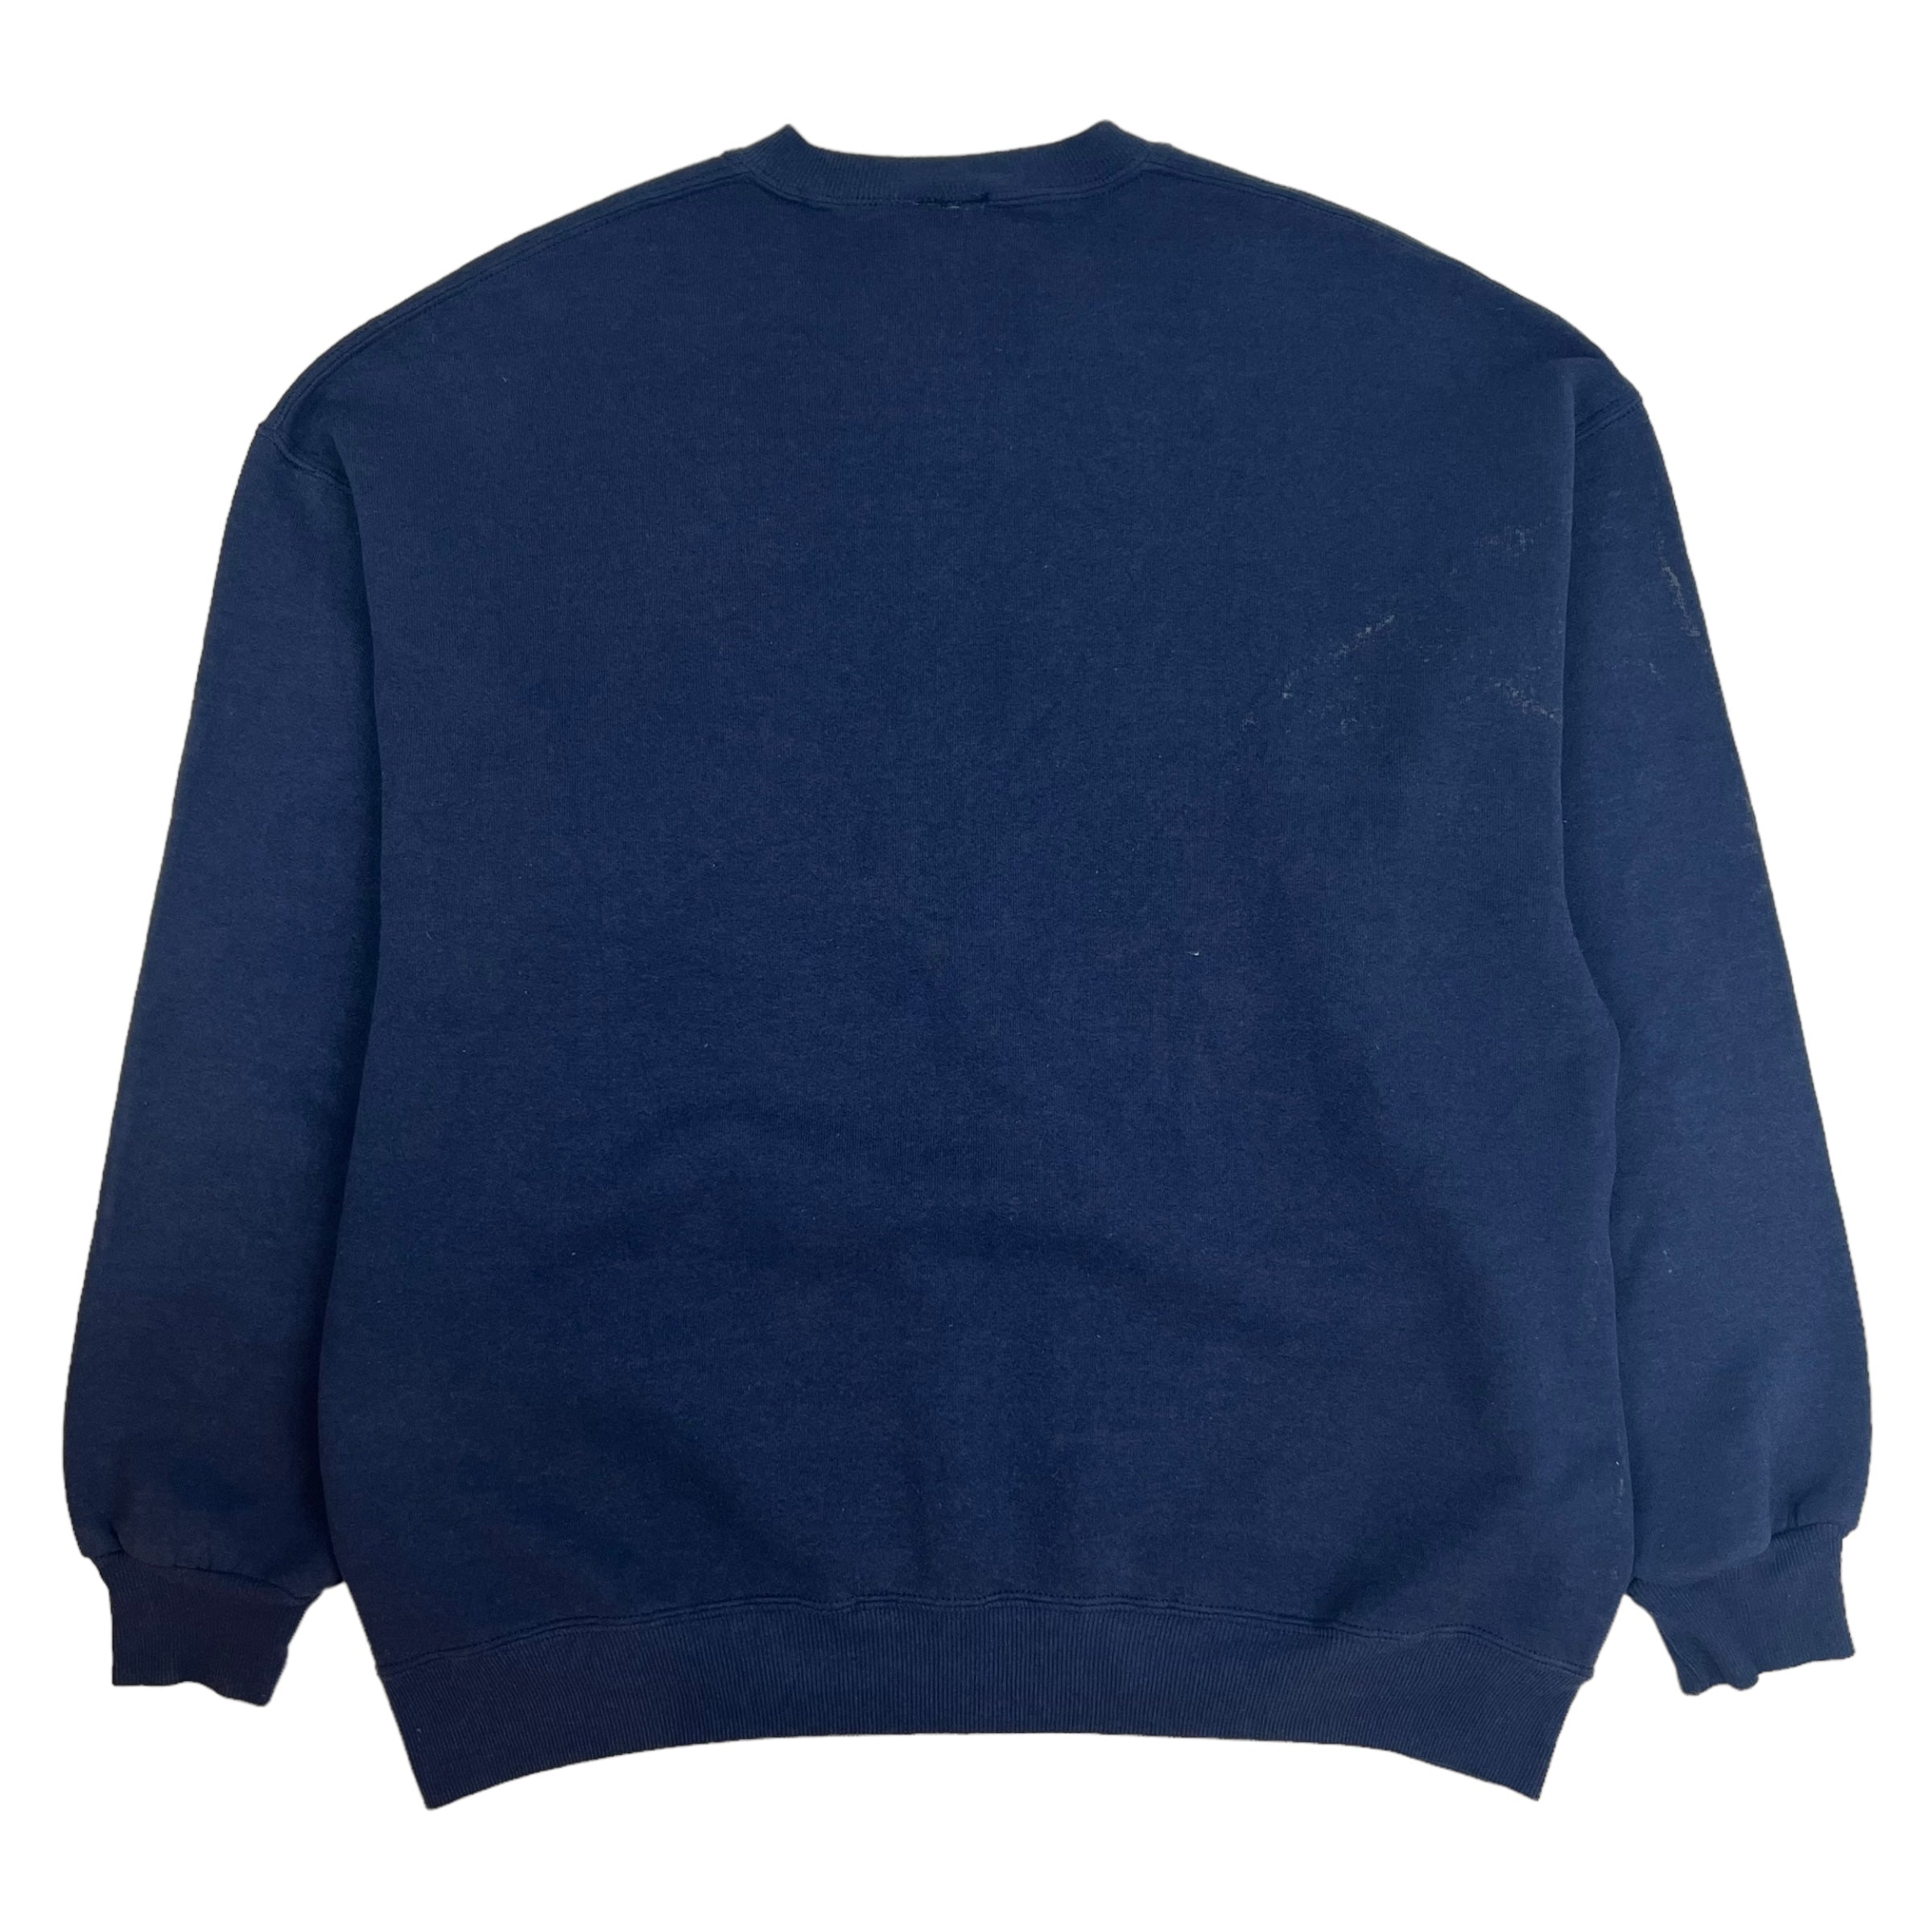 Vintage Notre Dame Crewneck Sweater - Navy Blue Retro Pullover